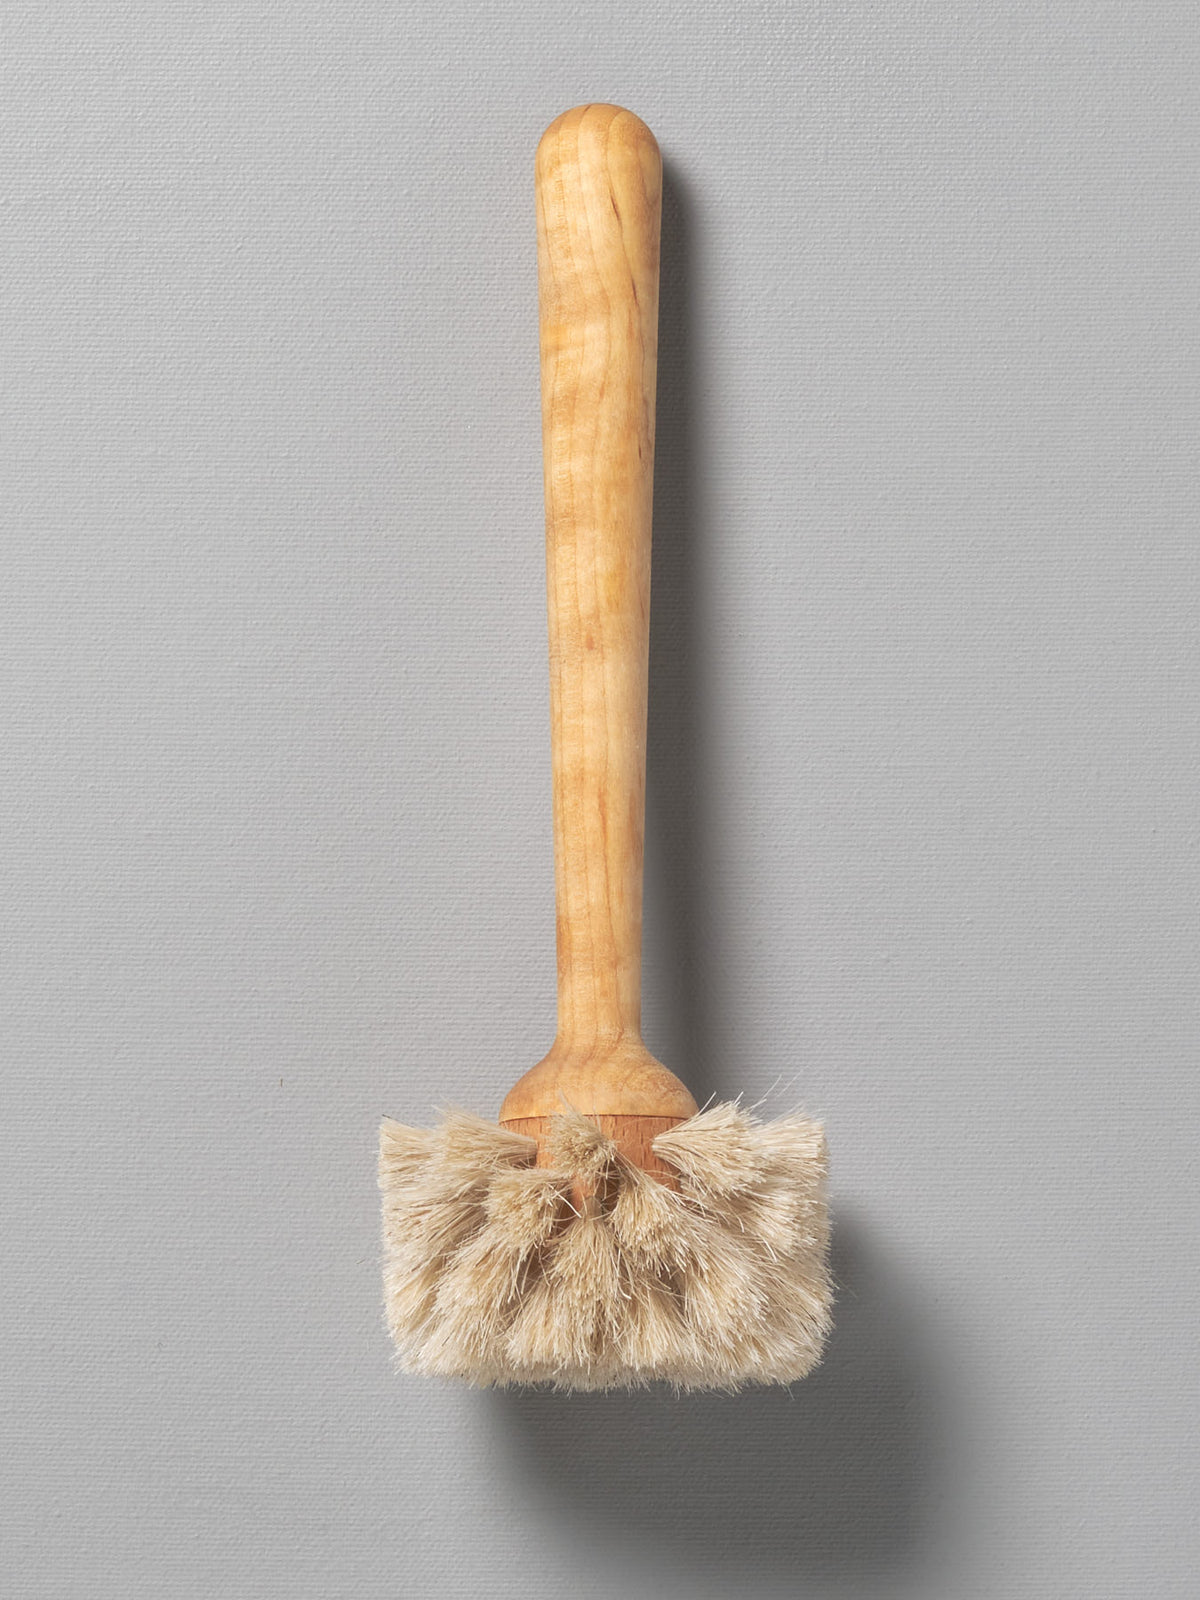 An Iris Hantverk glass brush with a wooden handle on a gray background.